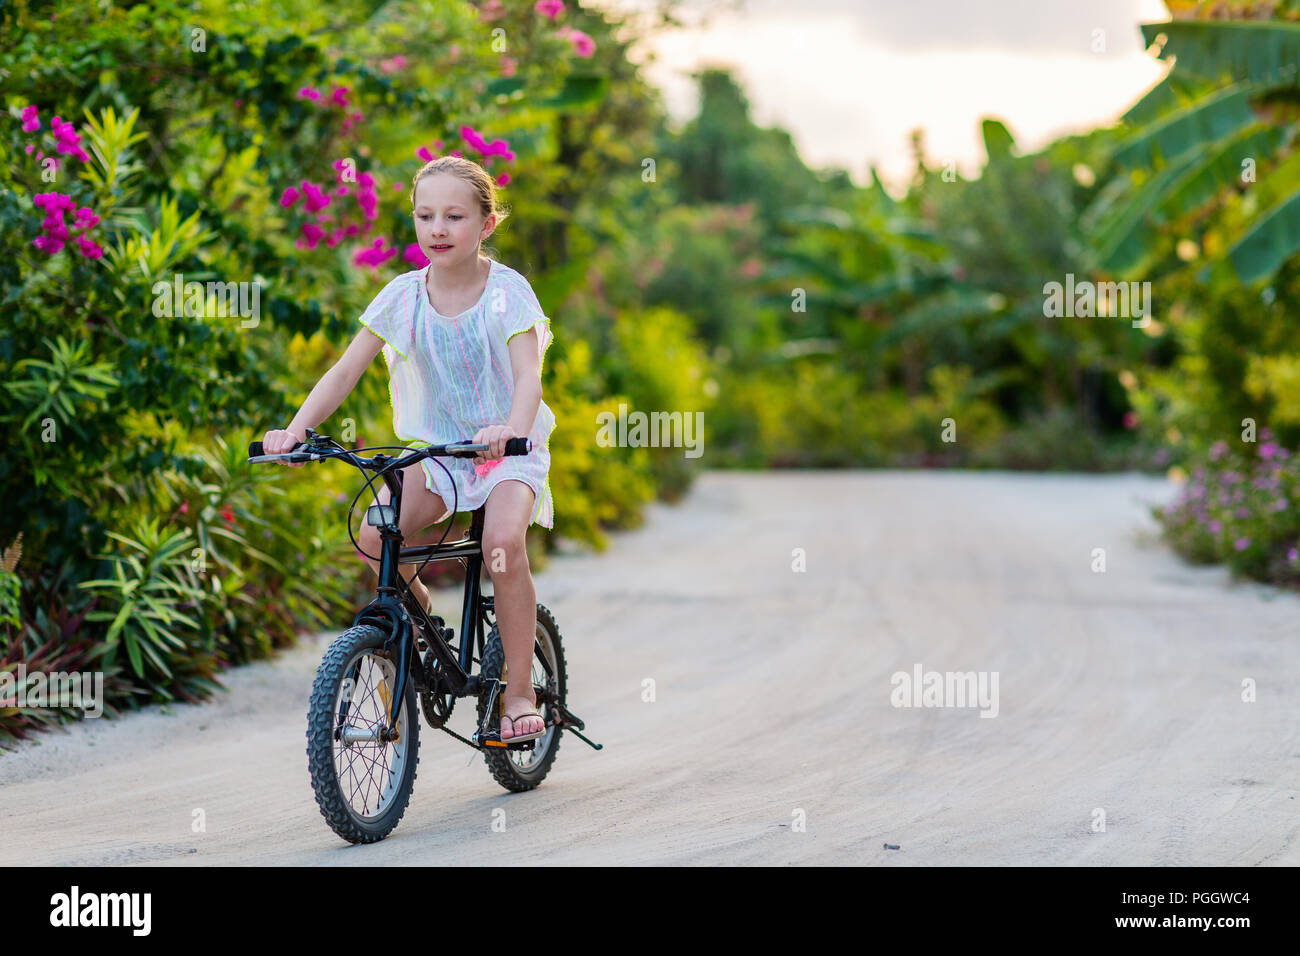 Cute girl biking at tropical island settings having fun Stock Photo